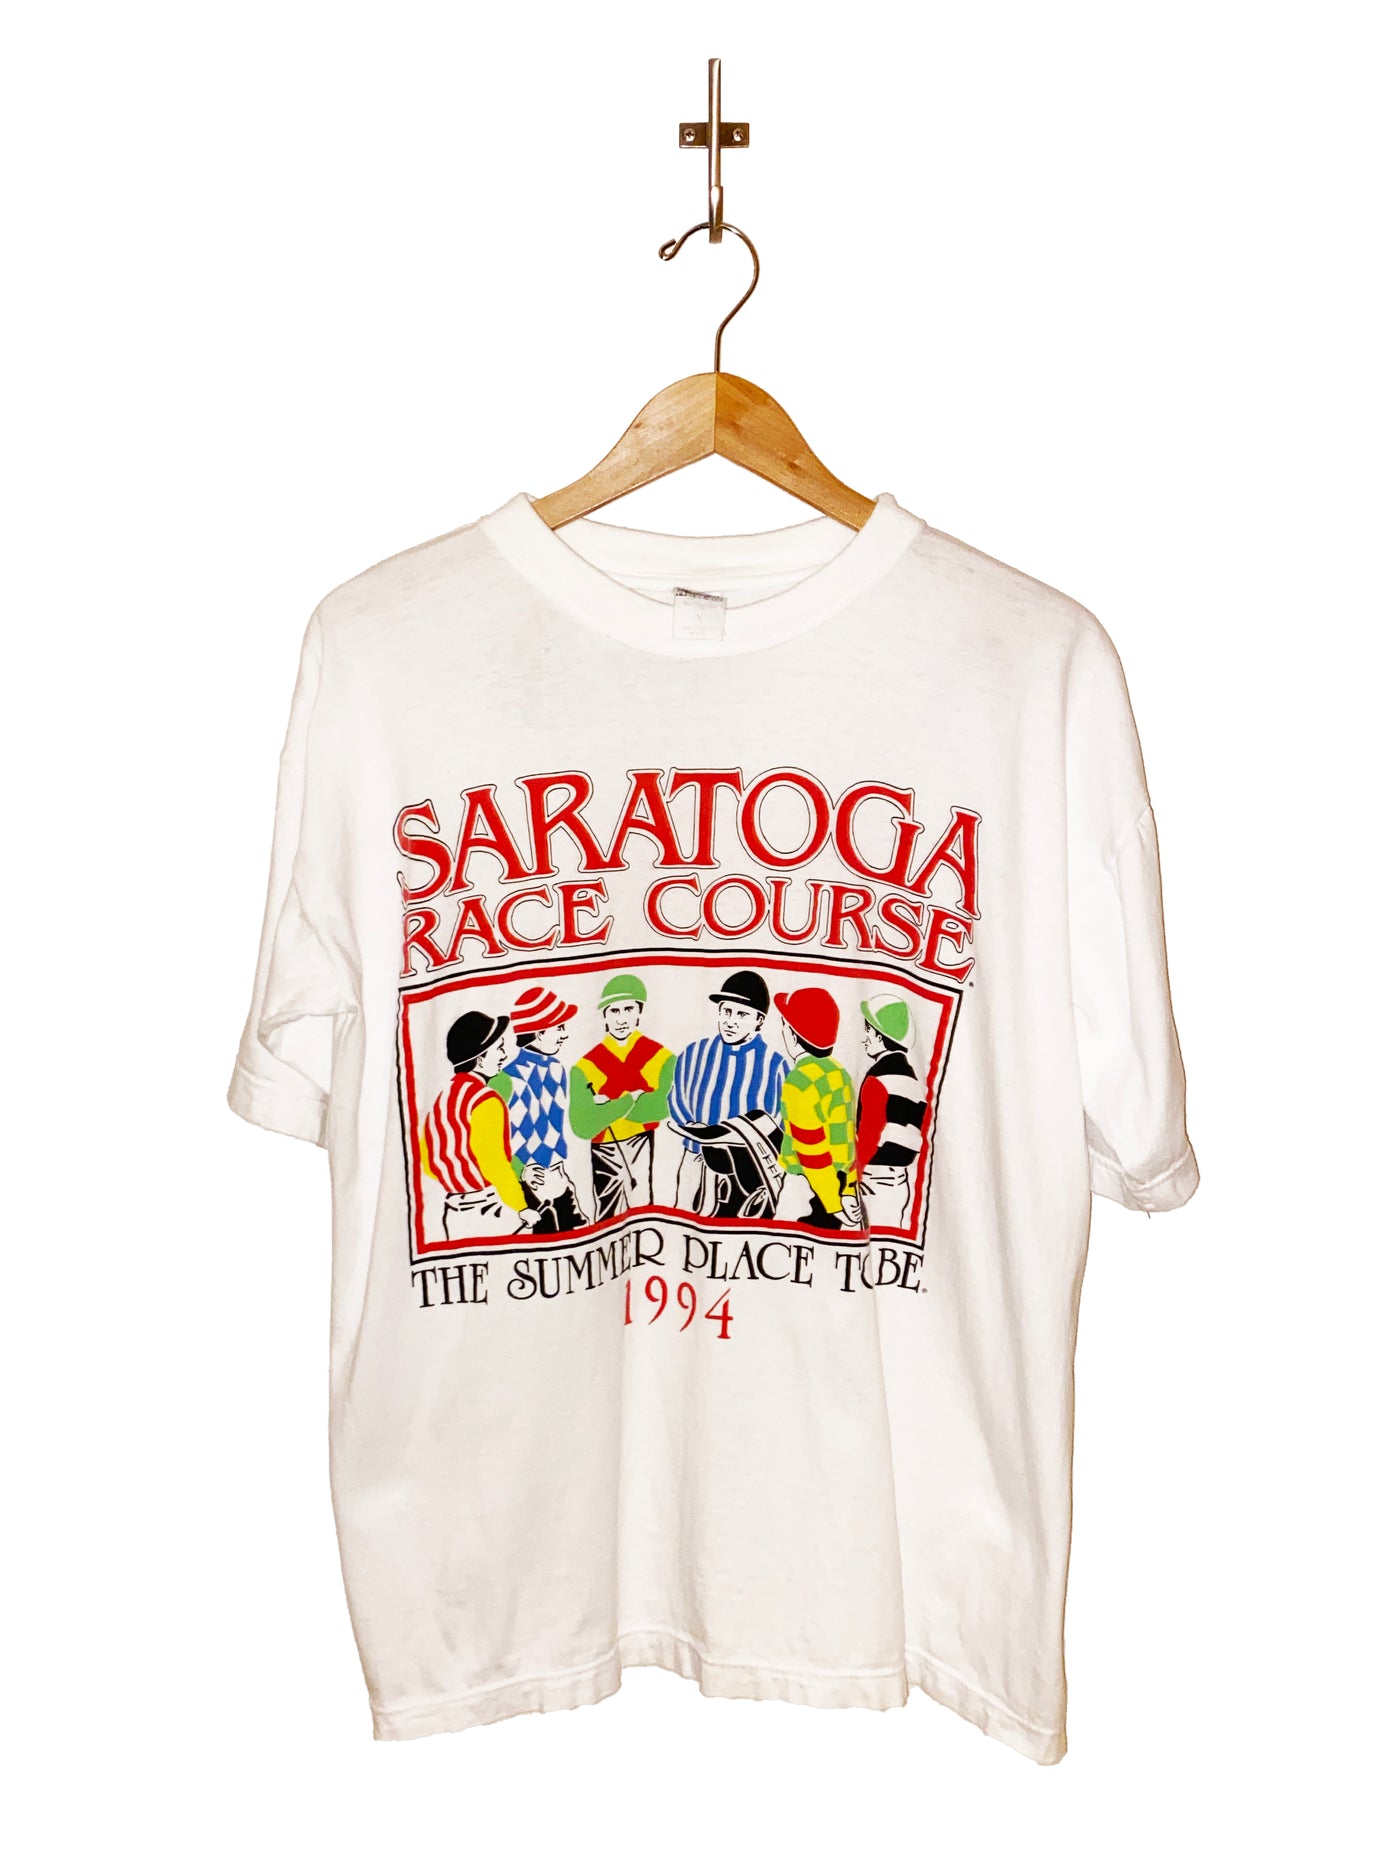 Vintage 1994 Saratoga Race Track T-Shirt